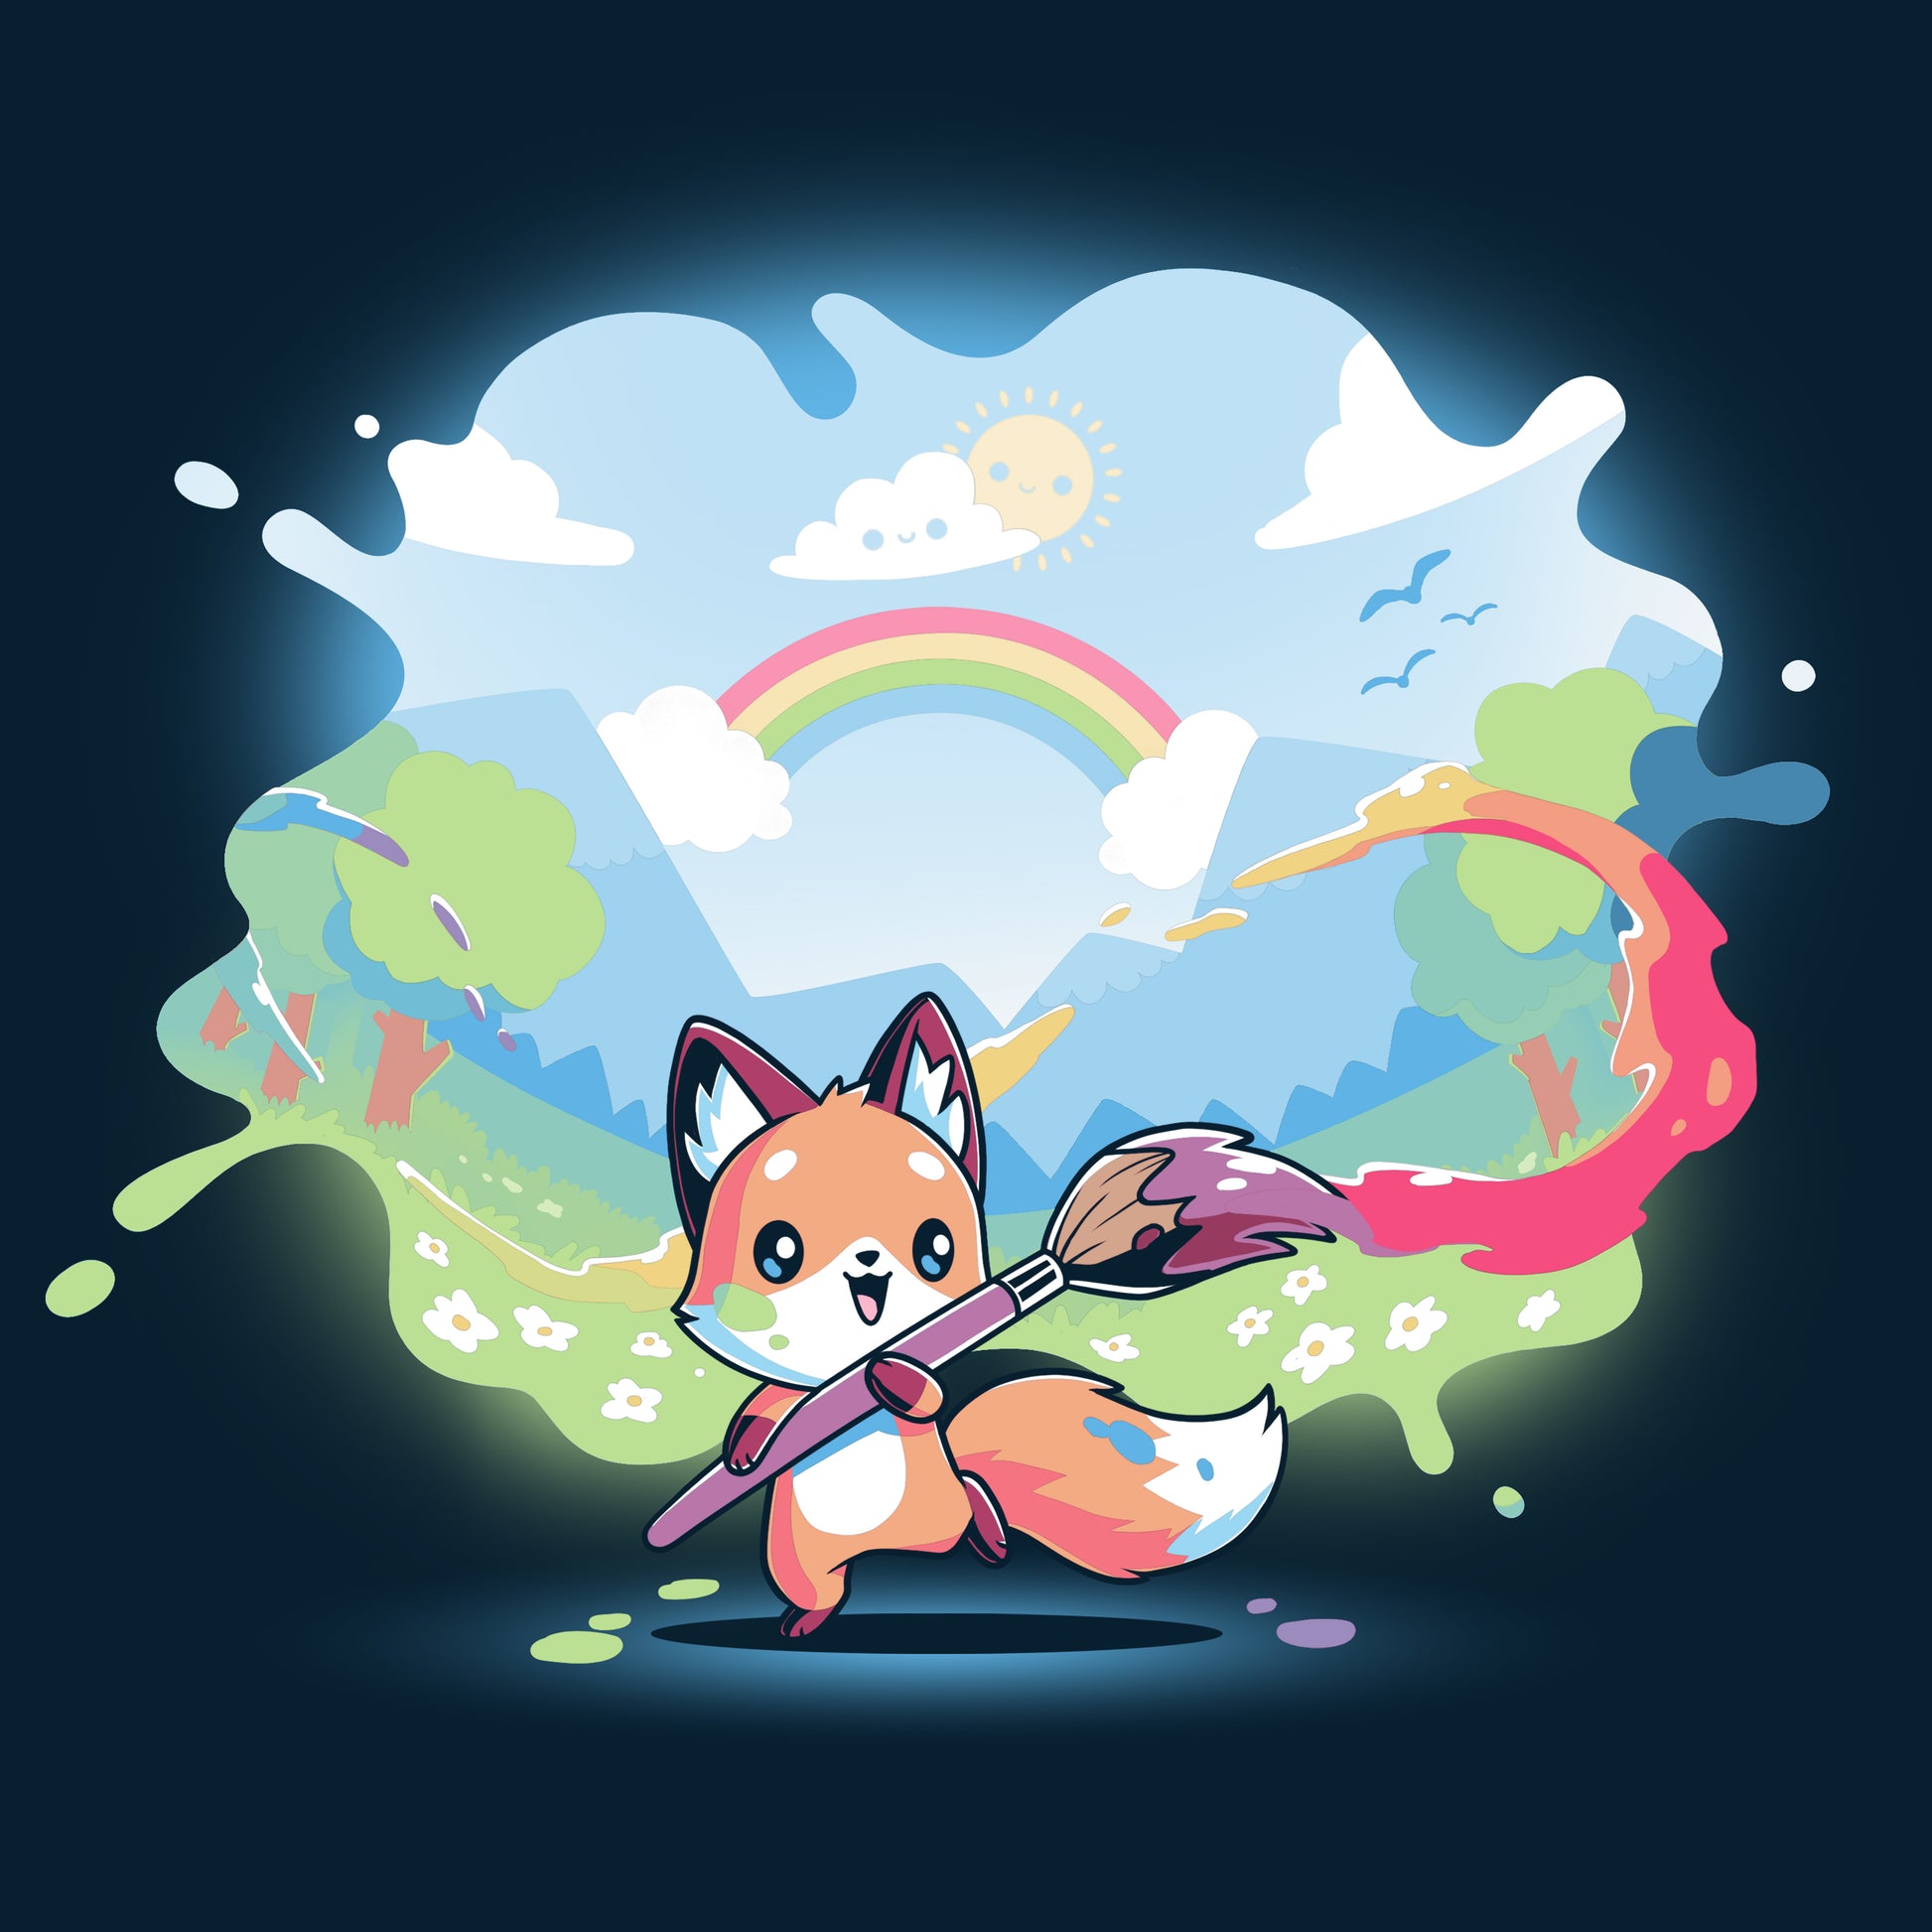 A Teeturtle Paint Your Own World featuring a cartoon fox artist.